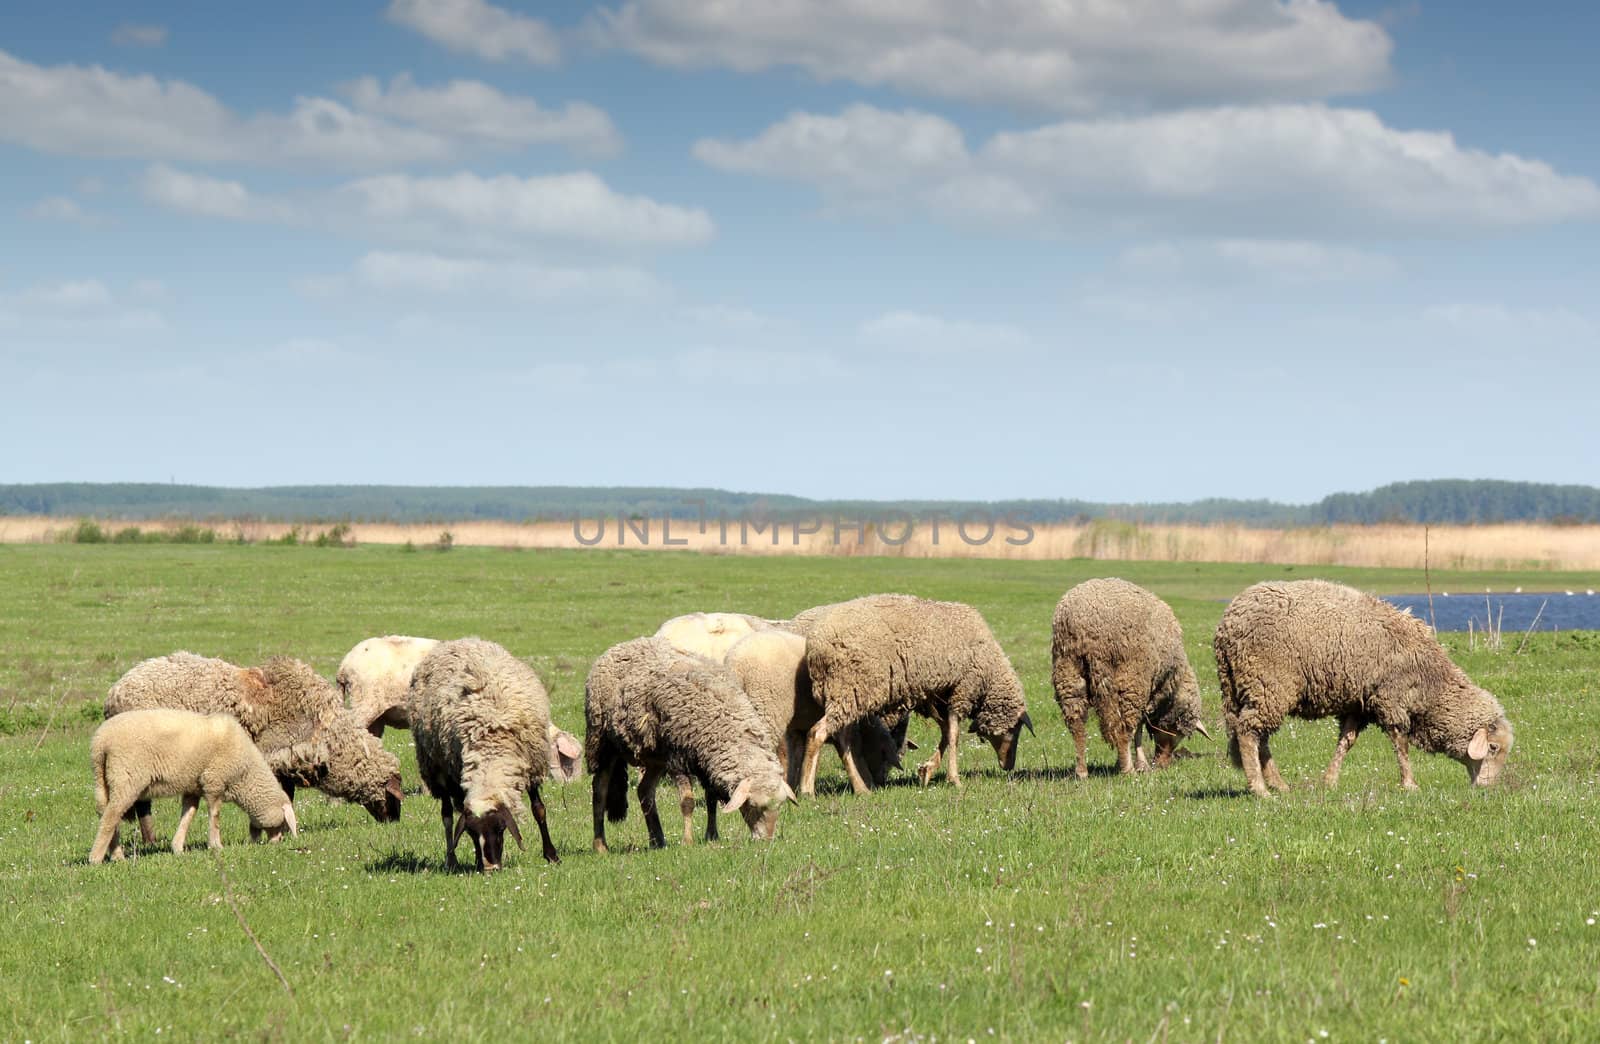 sheep on pasture farm scene